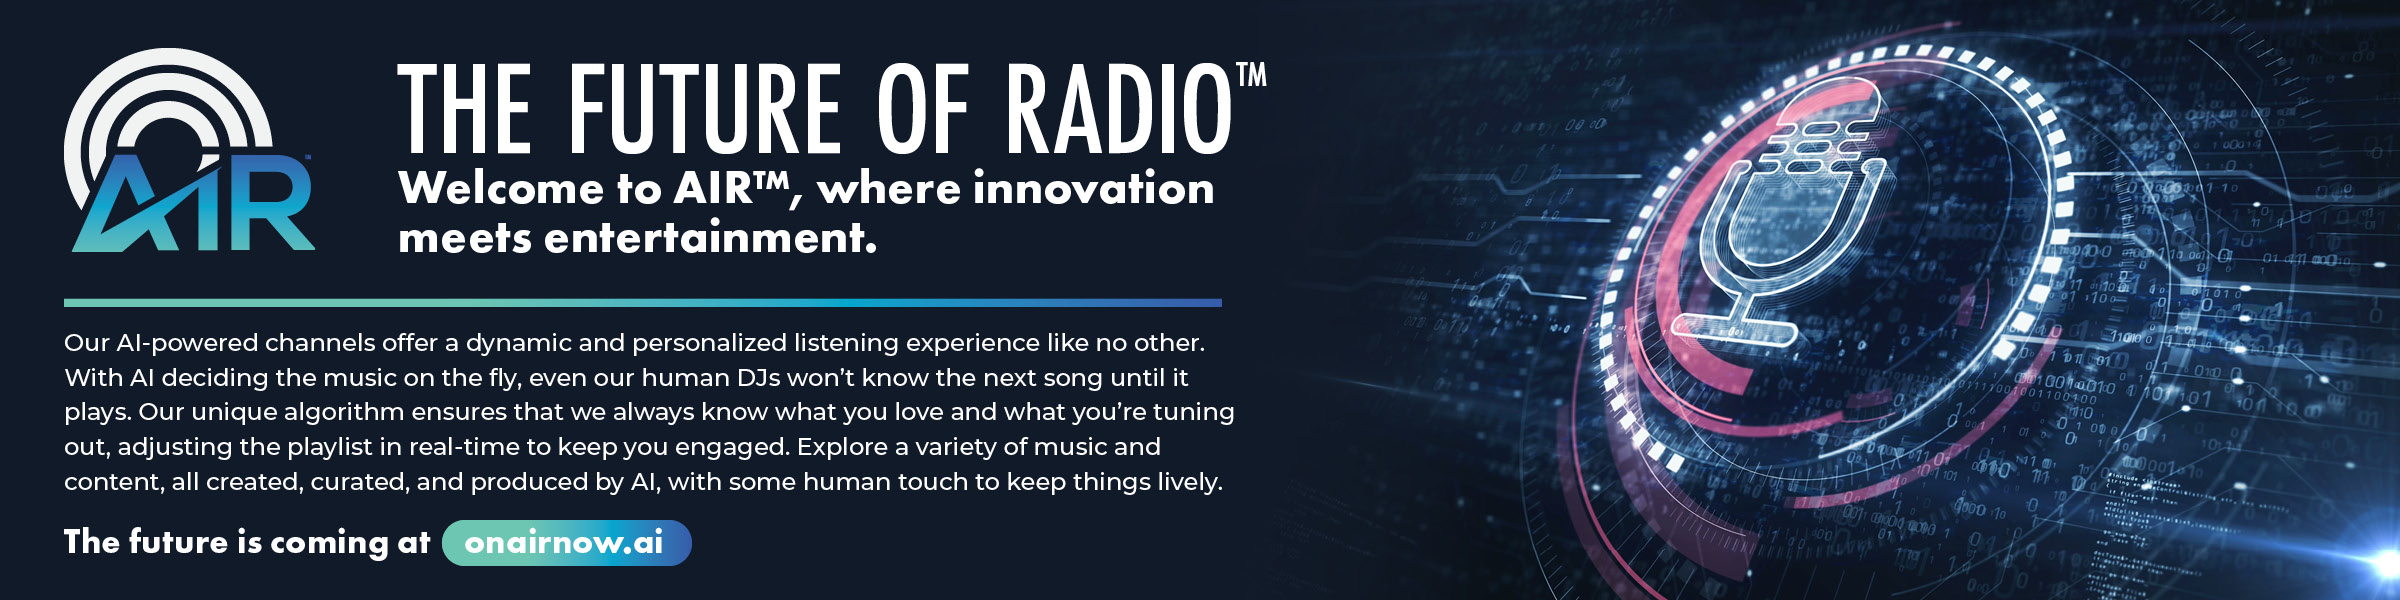 AIR - The Future of Radio